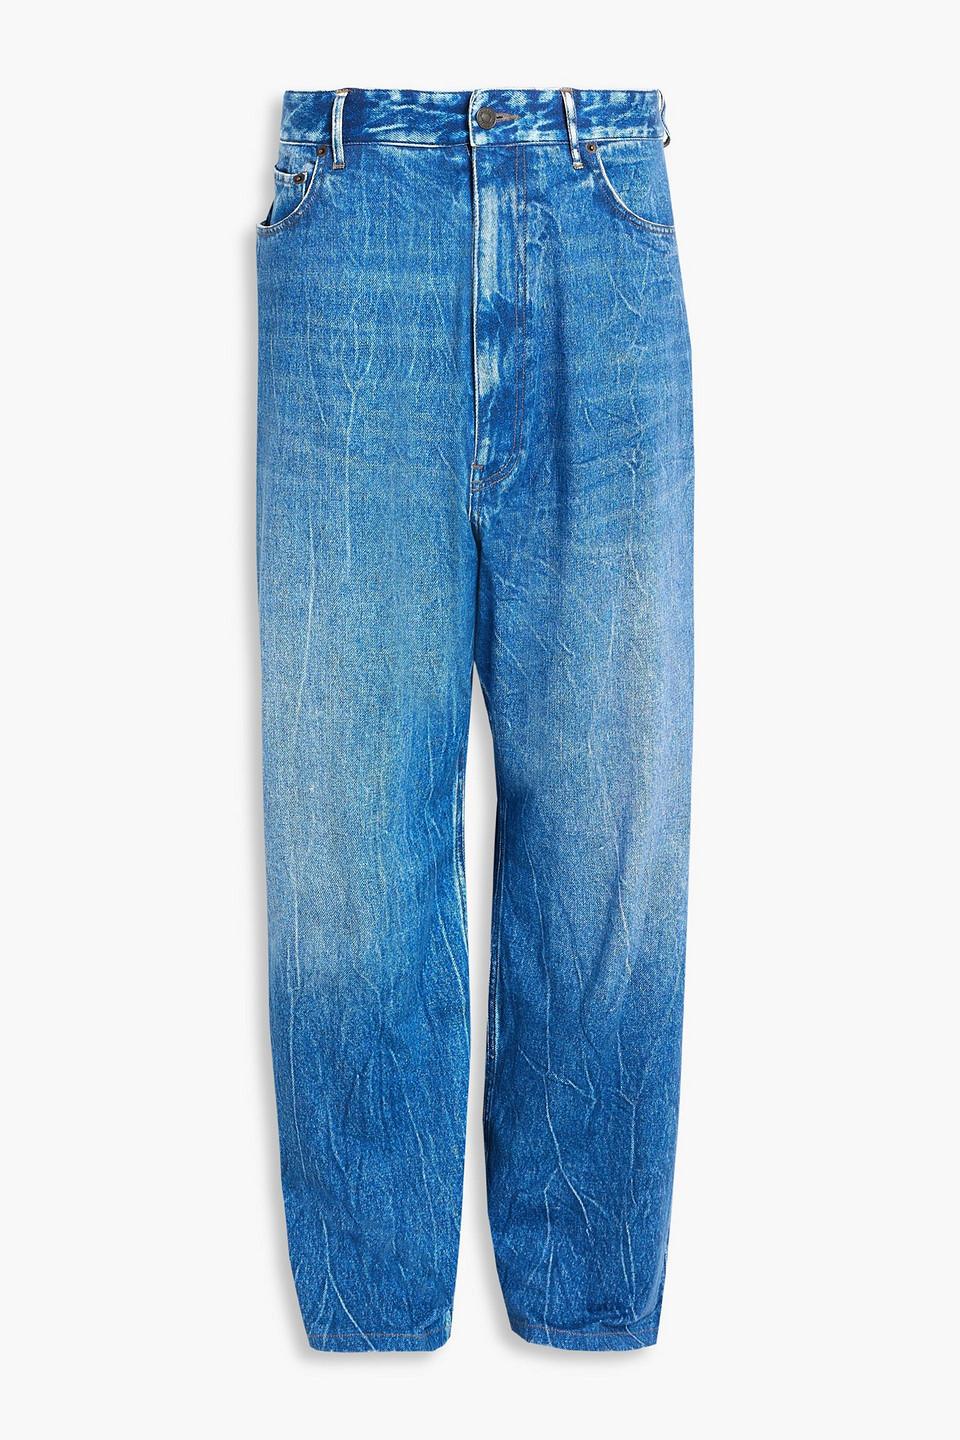 Balenciaga Denim-effect Cotton-jersey Sweatpants in Blue for Men